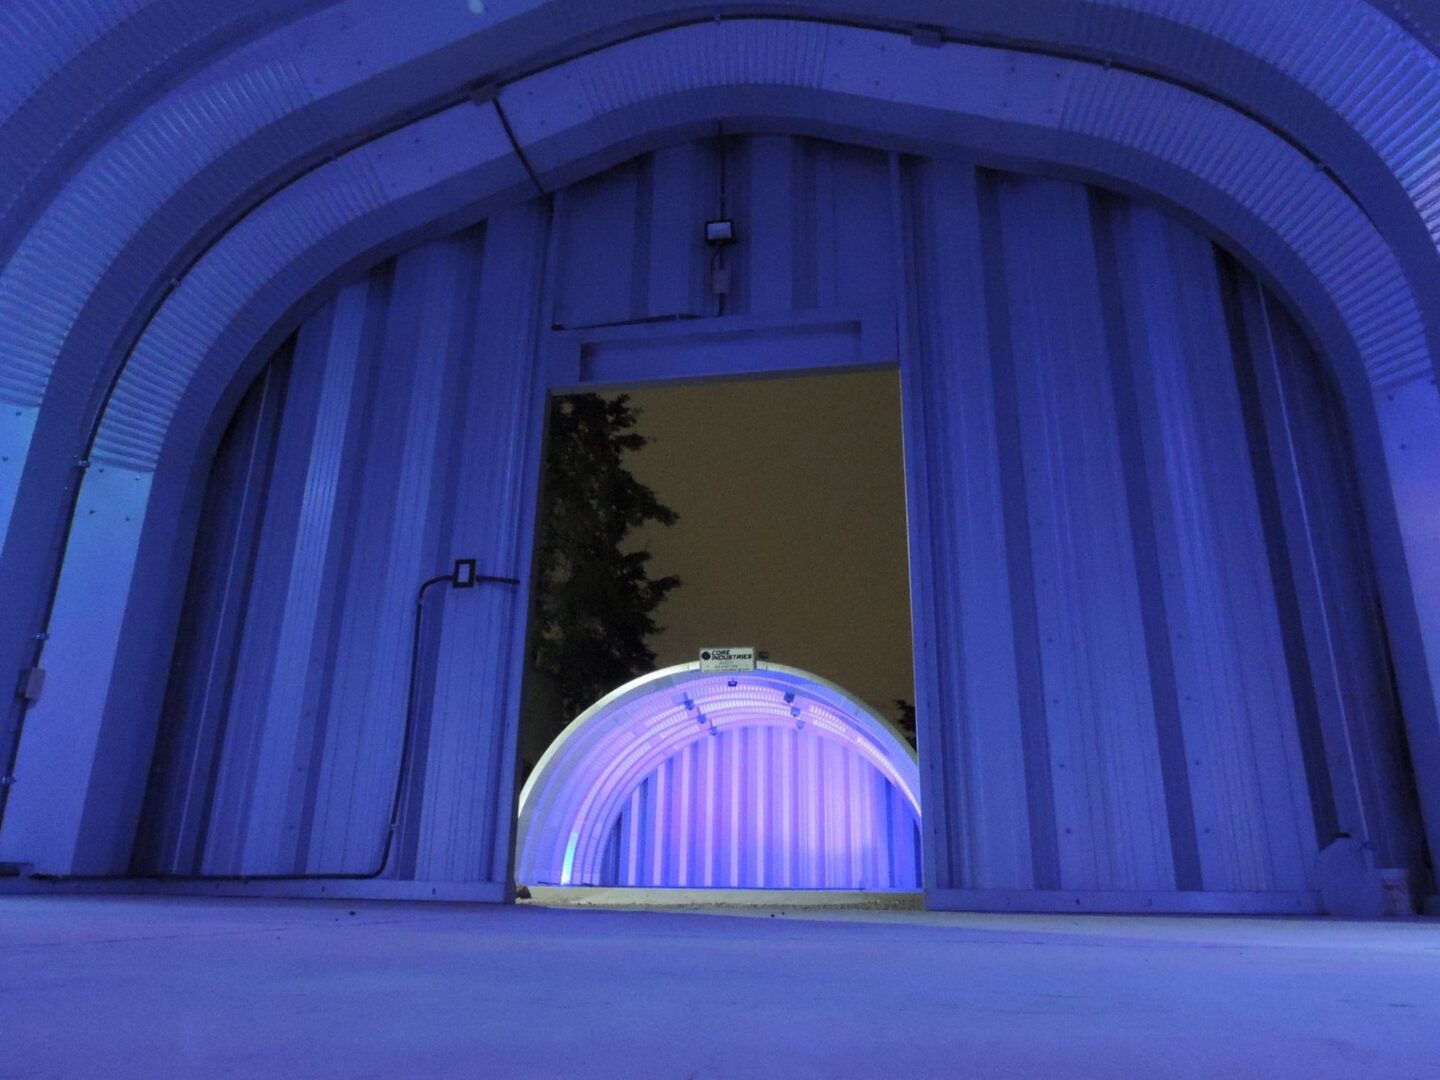 steel quonset hut illuminated with purple lighting